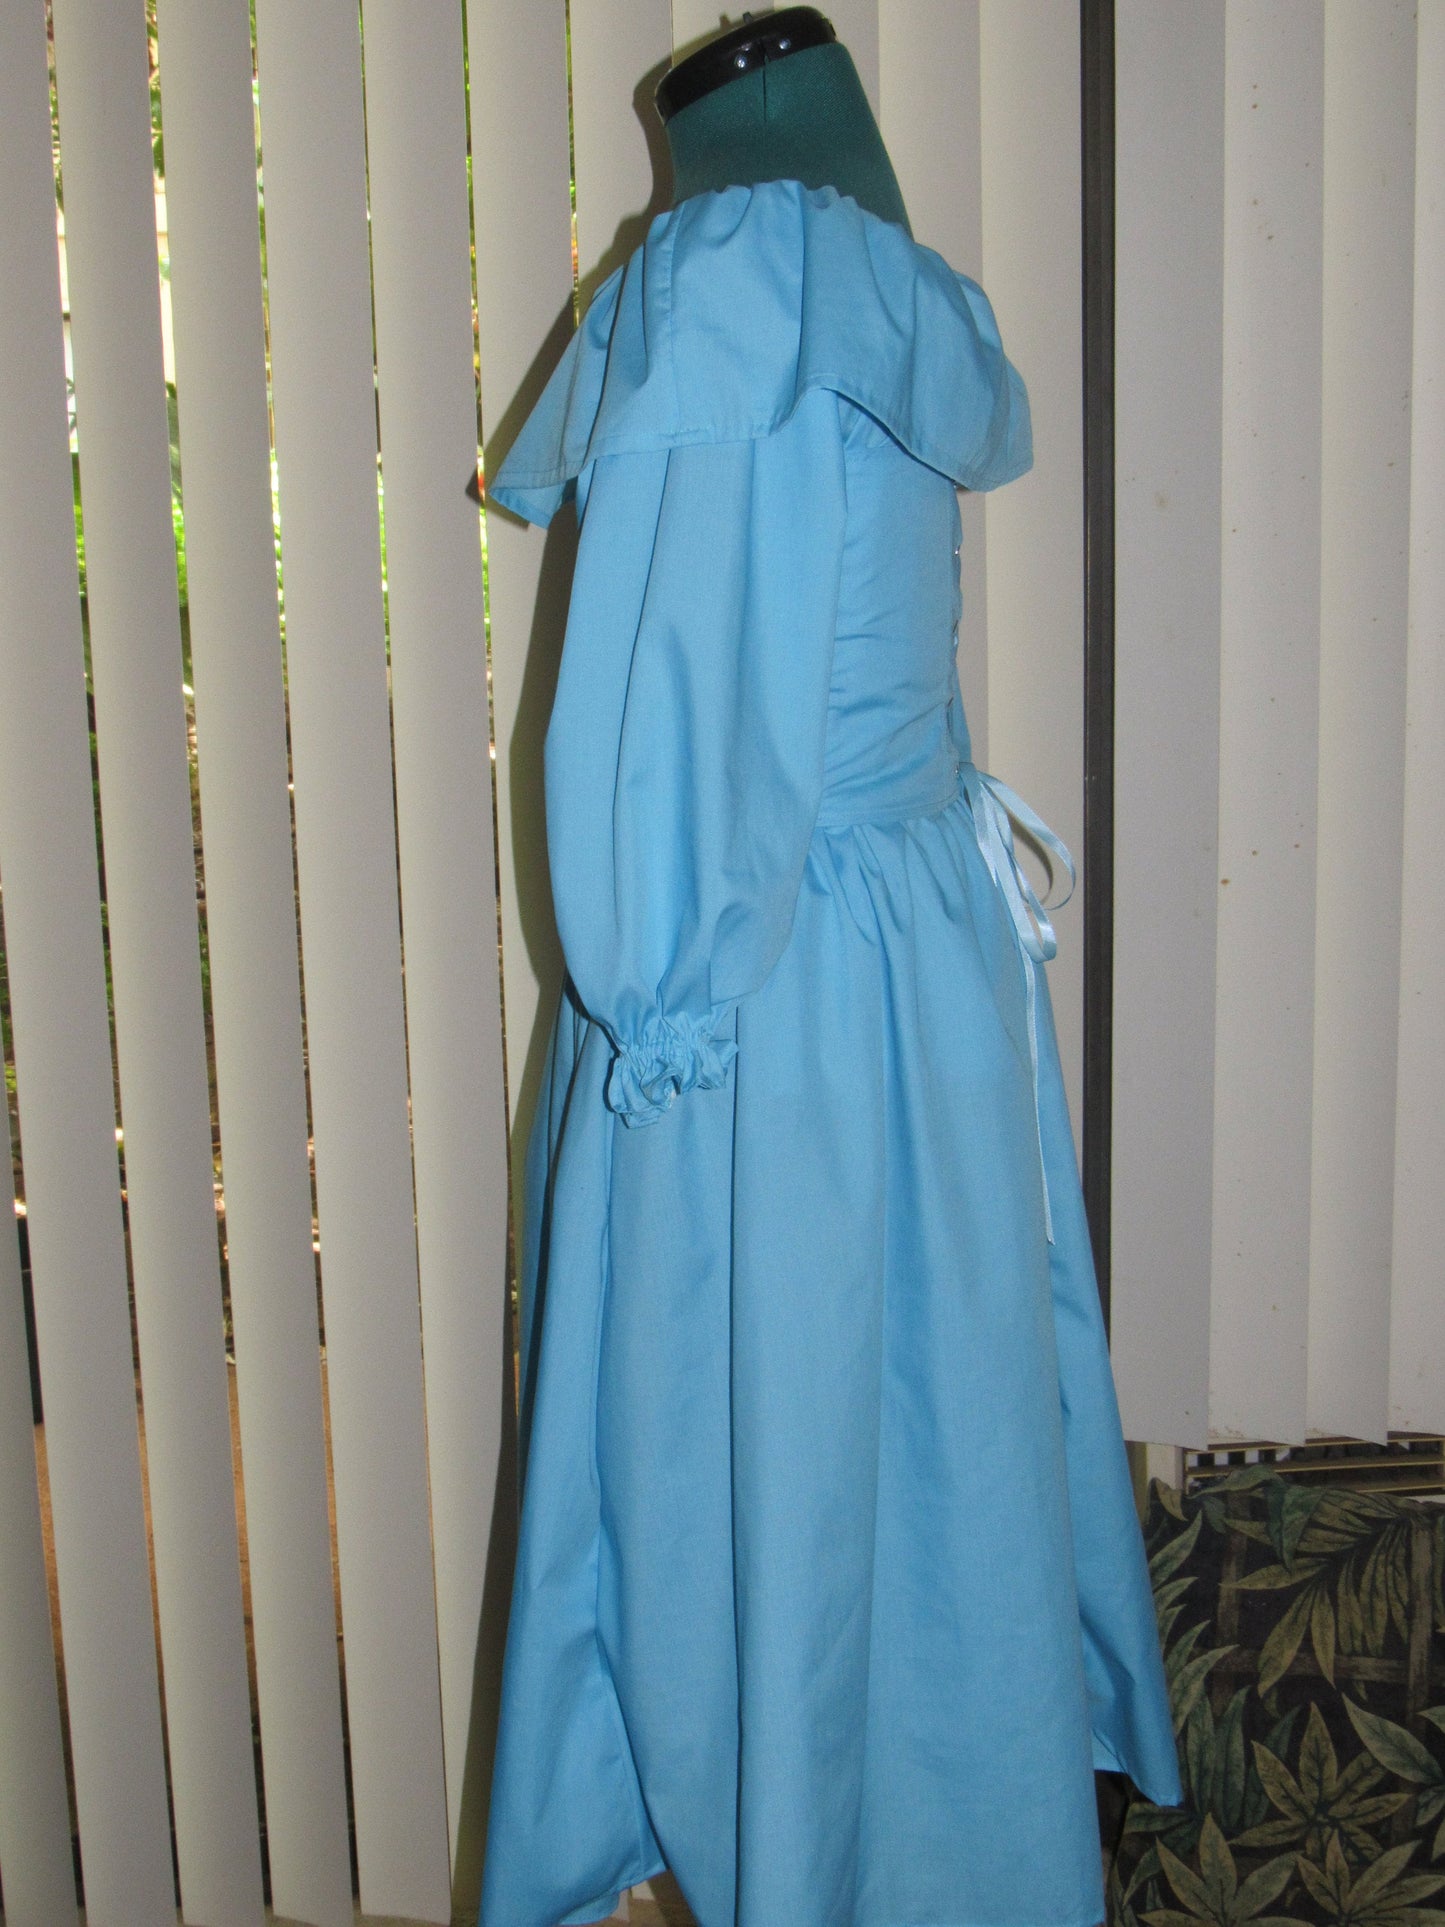 Renaissance Mermaid Princess Cosplay Costume 3 pc Blouse Skirt Corset for Teens Adults